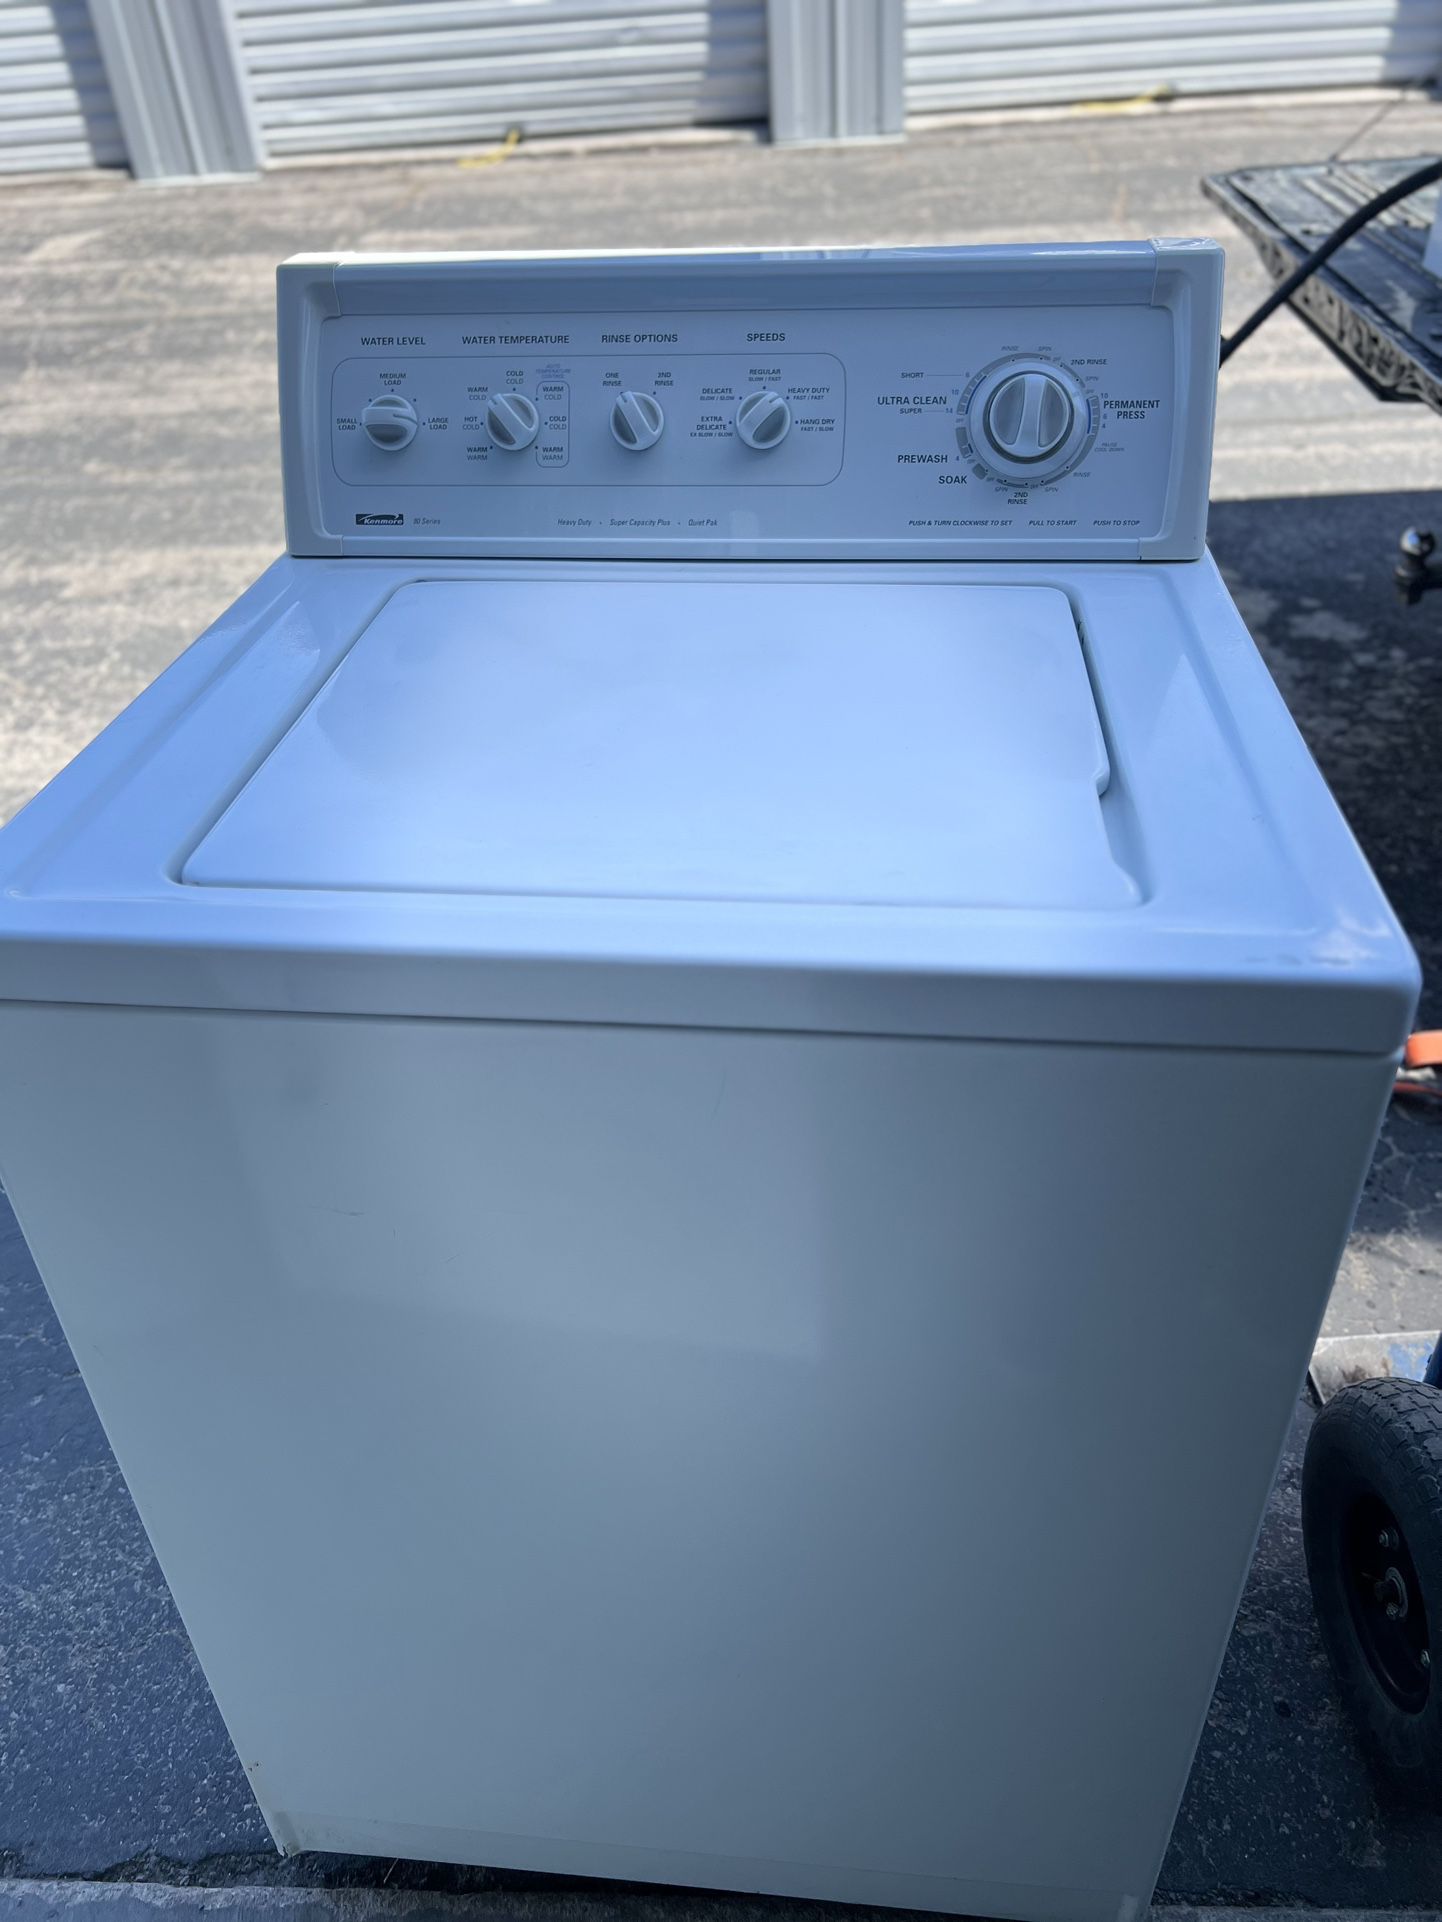 Heavy Duty Washing Machine $200